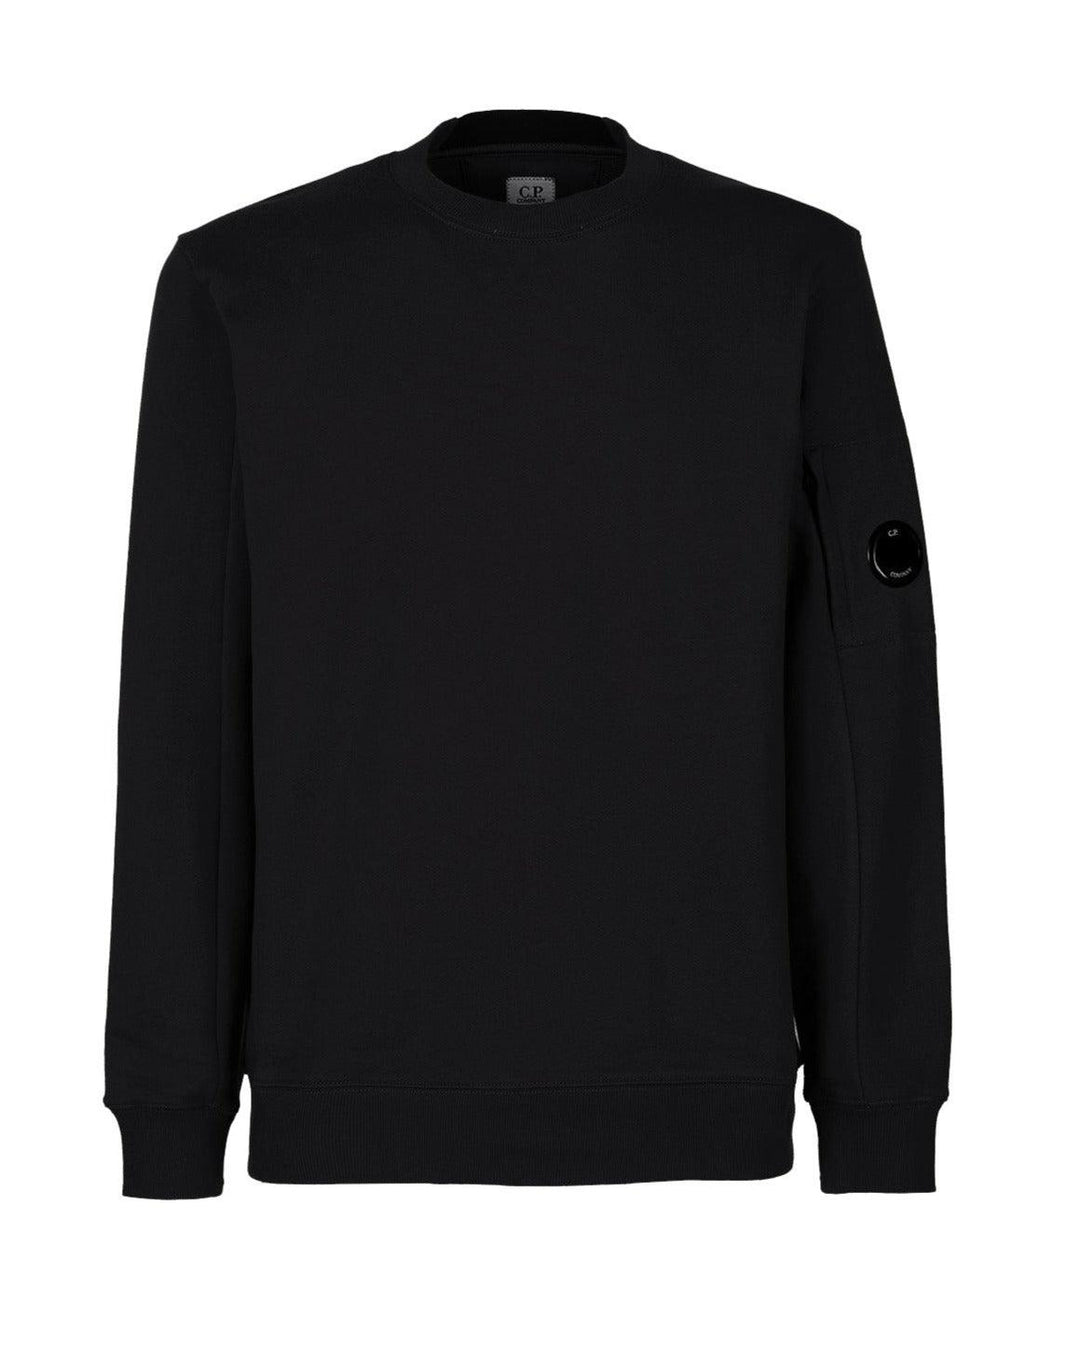 CP Company Lens Sweatshirt Black - Urban Menswear